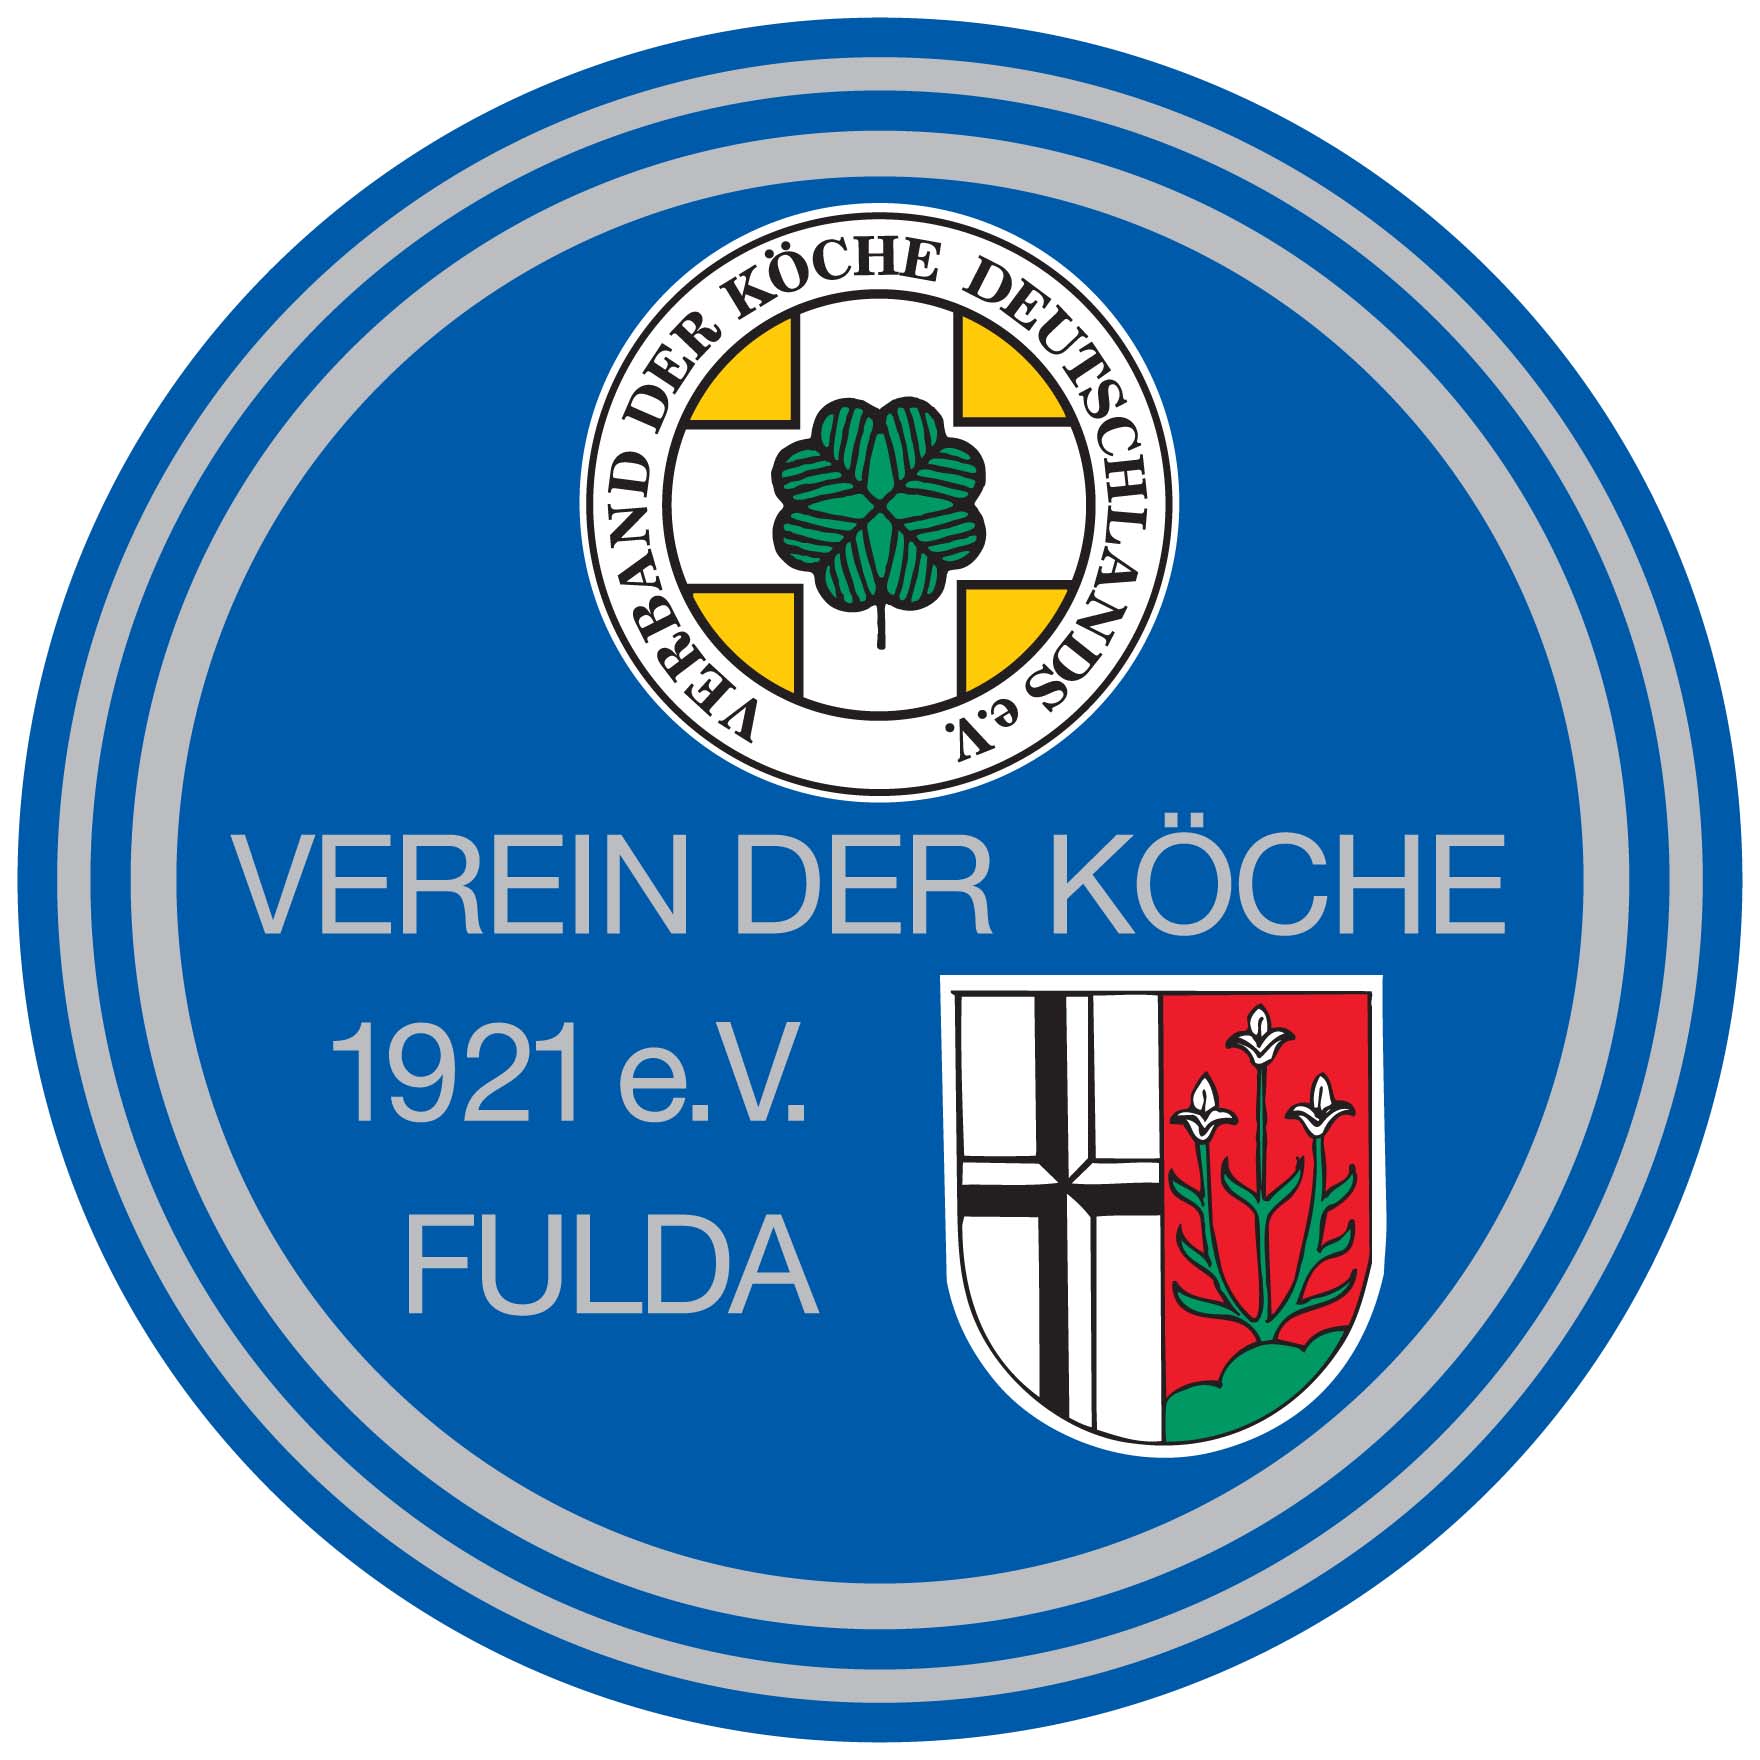 Verein der Köche 1921 Fulda e.V.